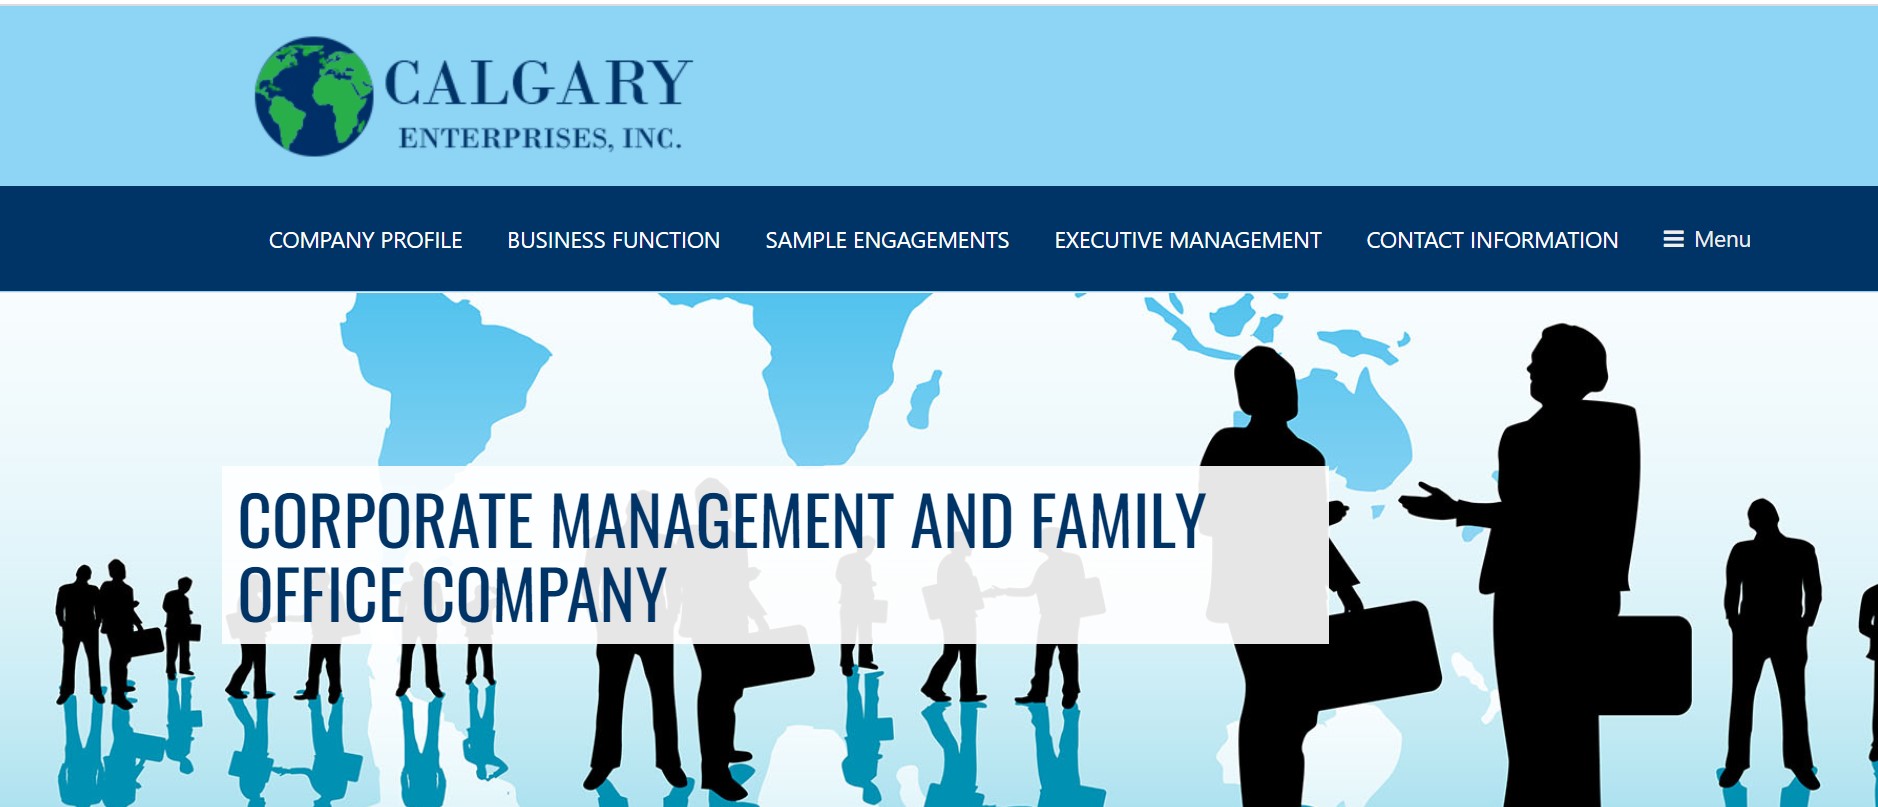 Calgary Enterprises, Inc.